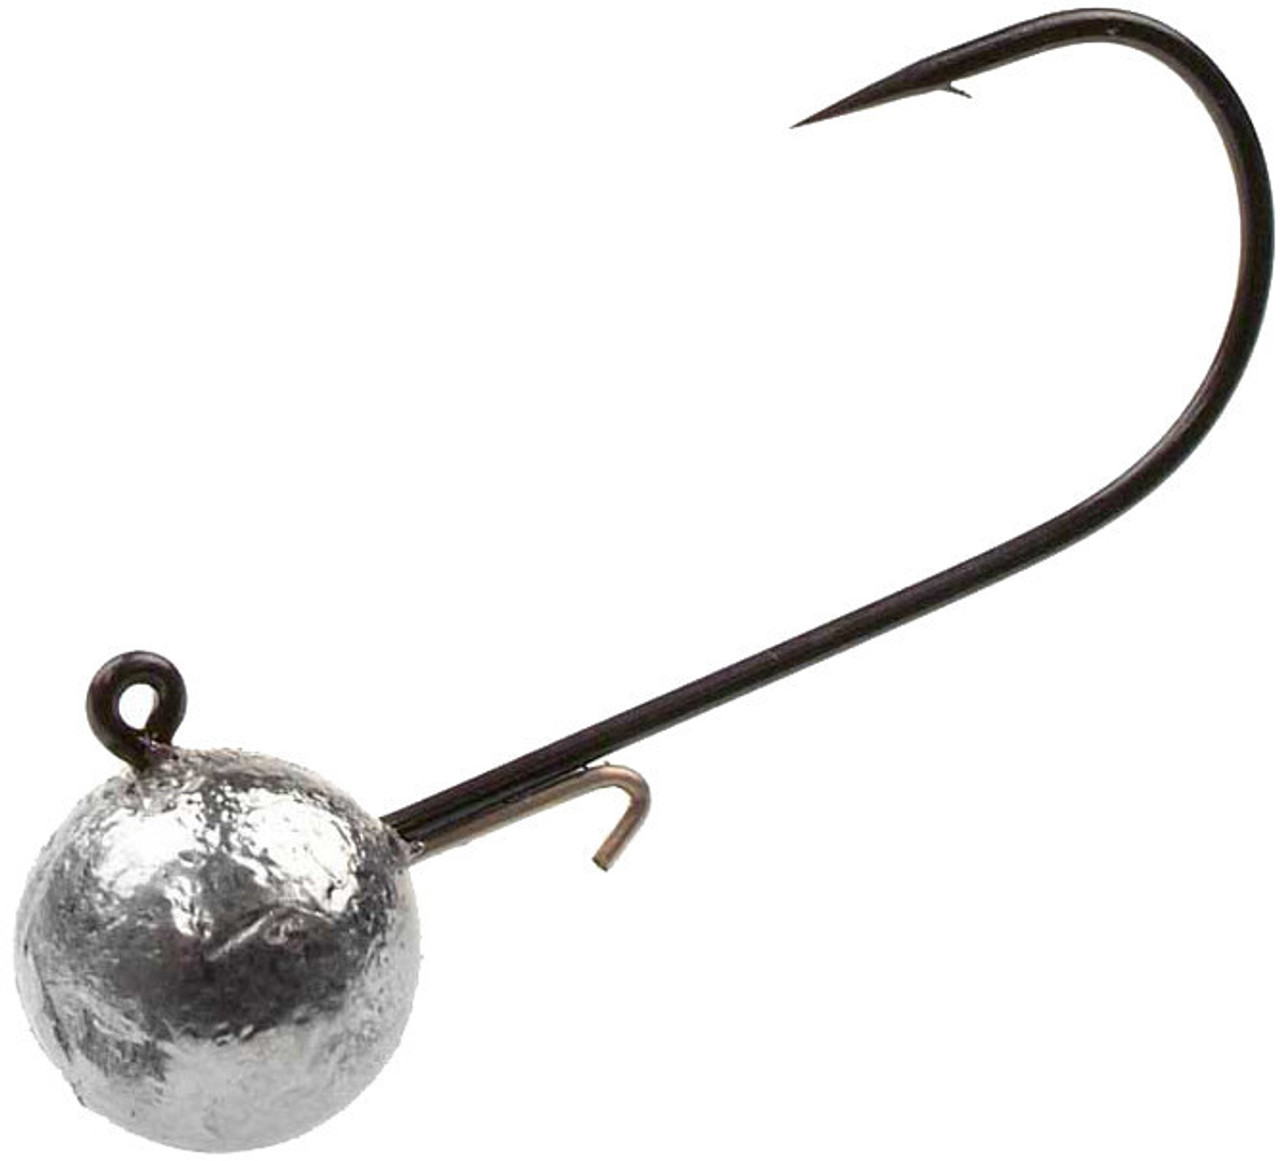 Fishing Jig Head Wire Keeper Weights Sinker Mold 1-8 grams 8 cavity